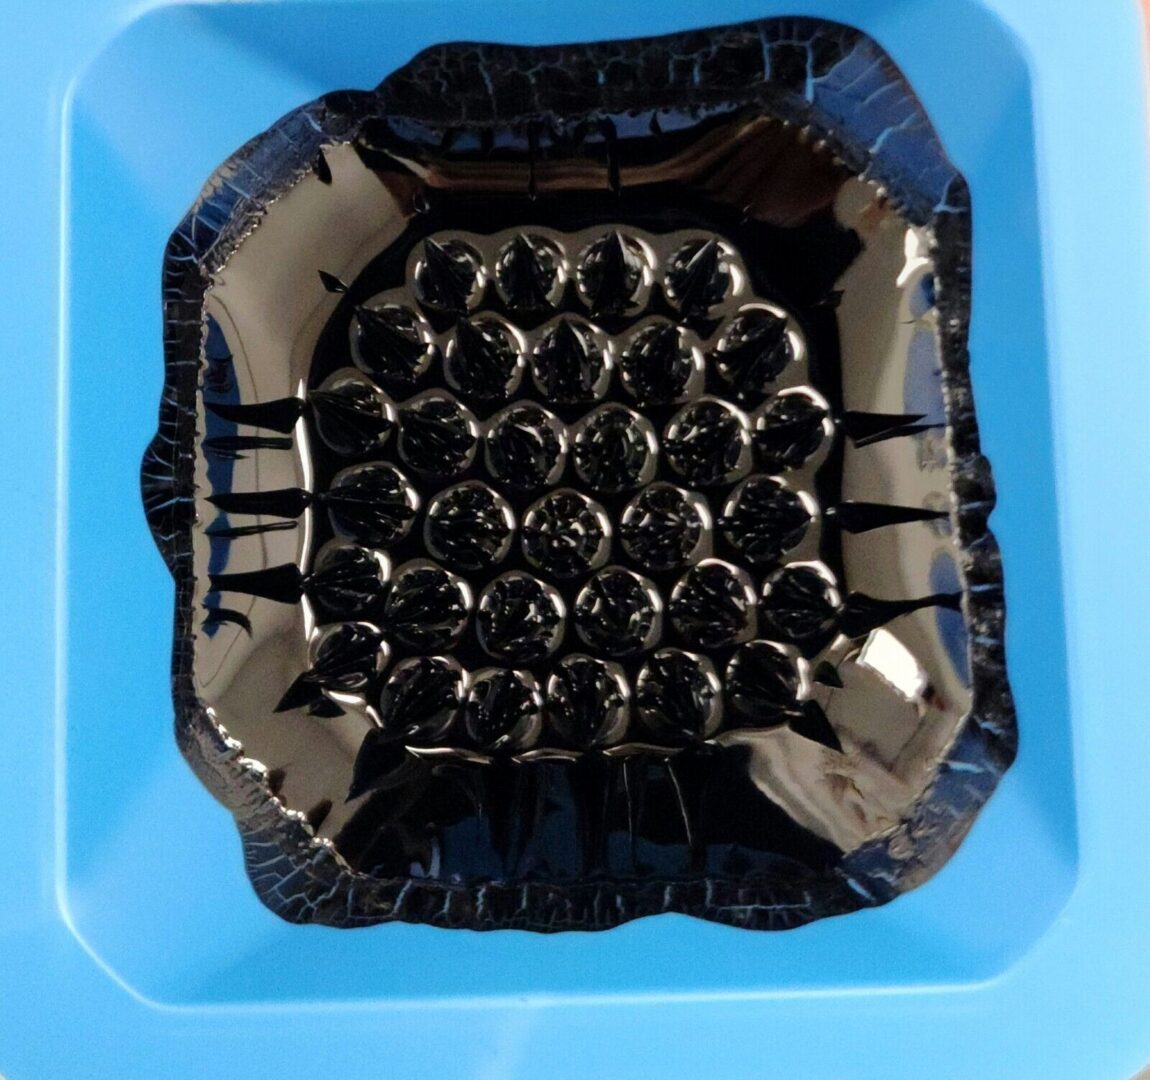 Top view of a Bulk Ferrofluid Magnetic Liquid